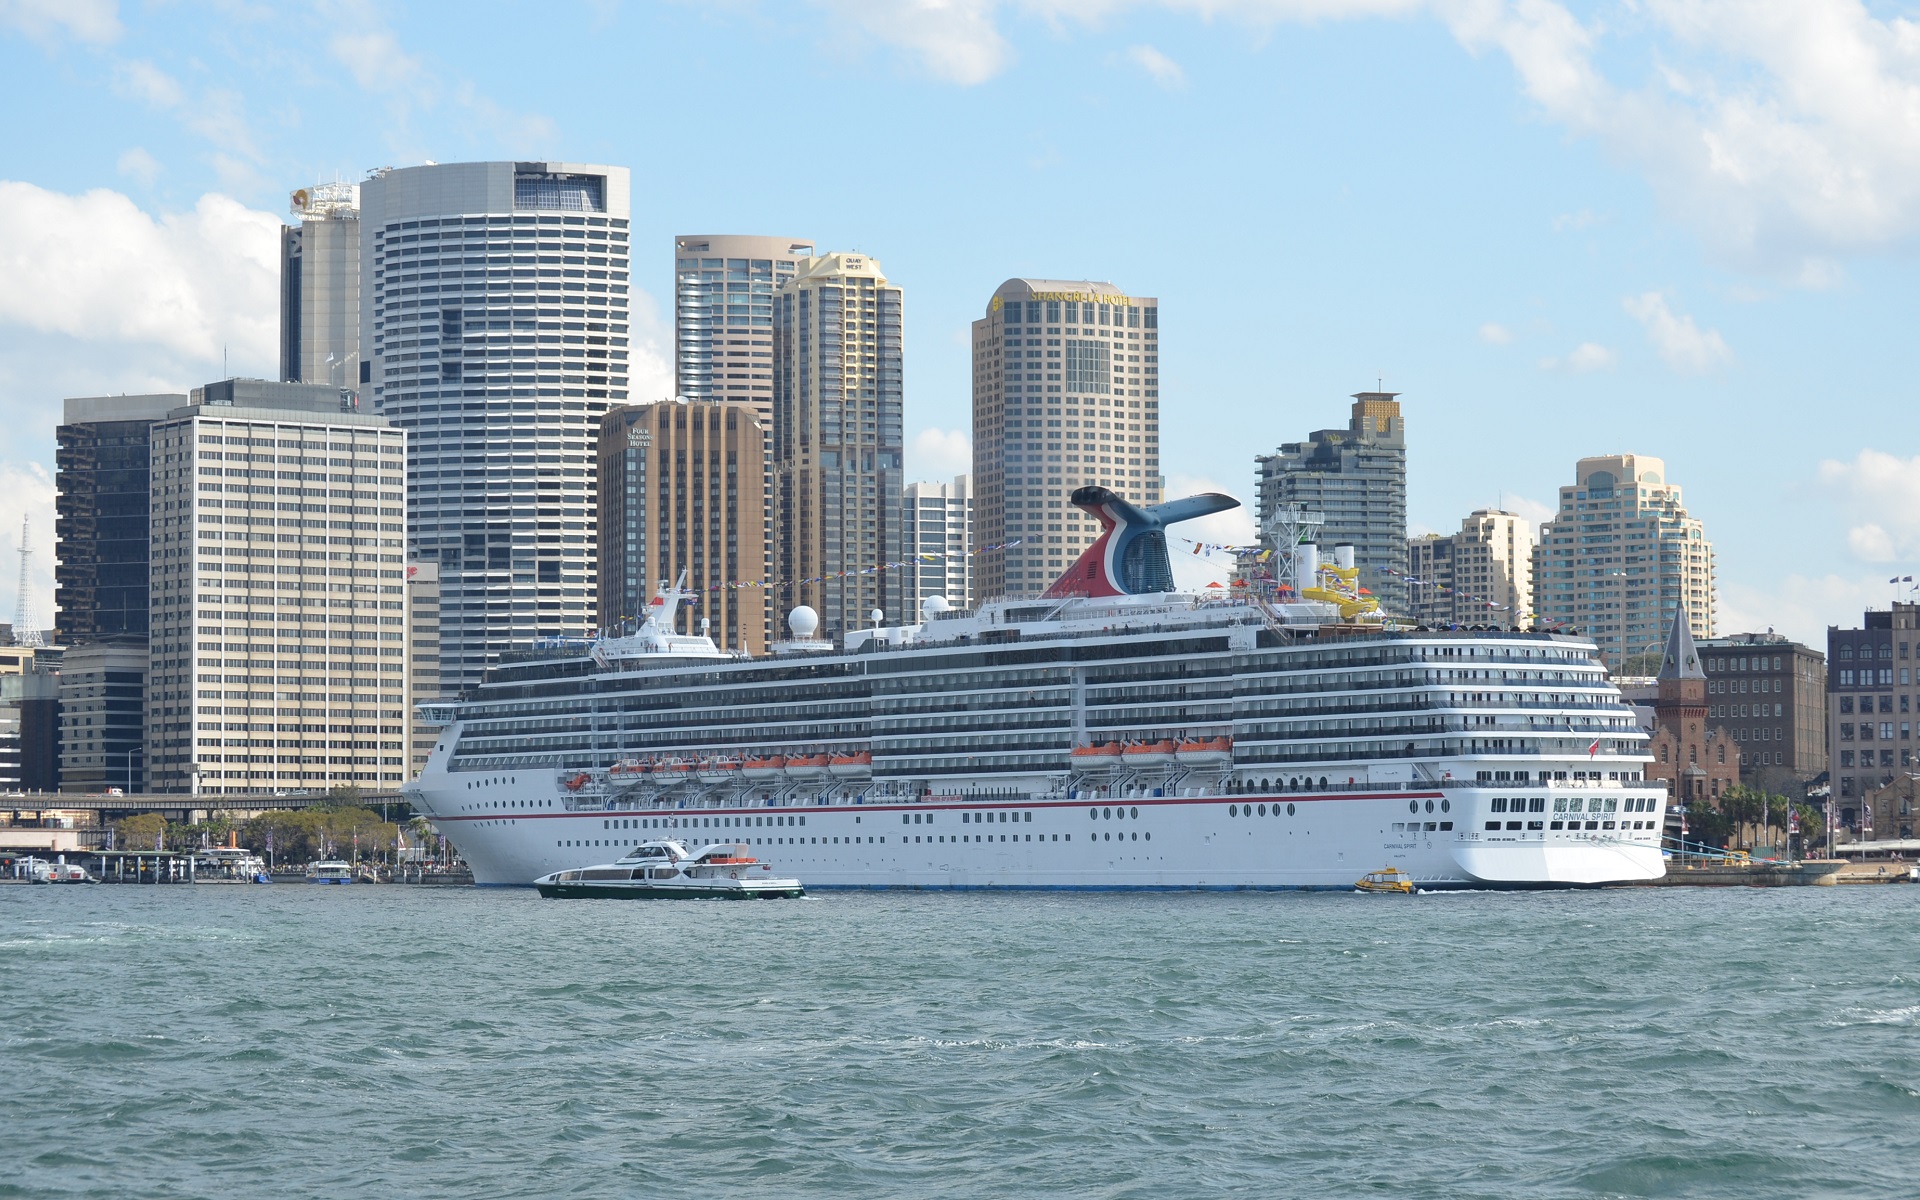 vehicles, carnival spirit, australia, boat, building, city, cruise ship, ship, sydney harbour, sydney